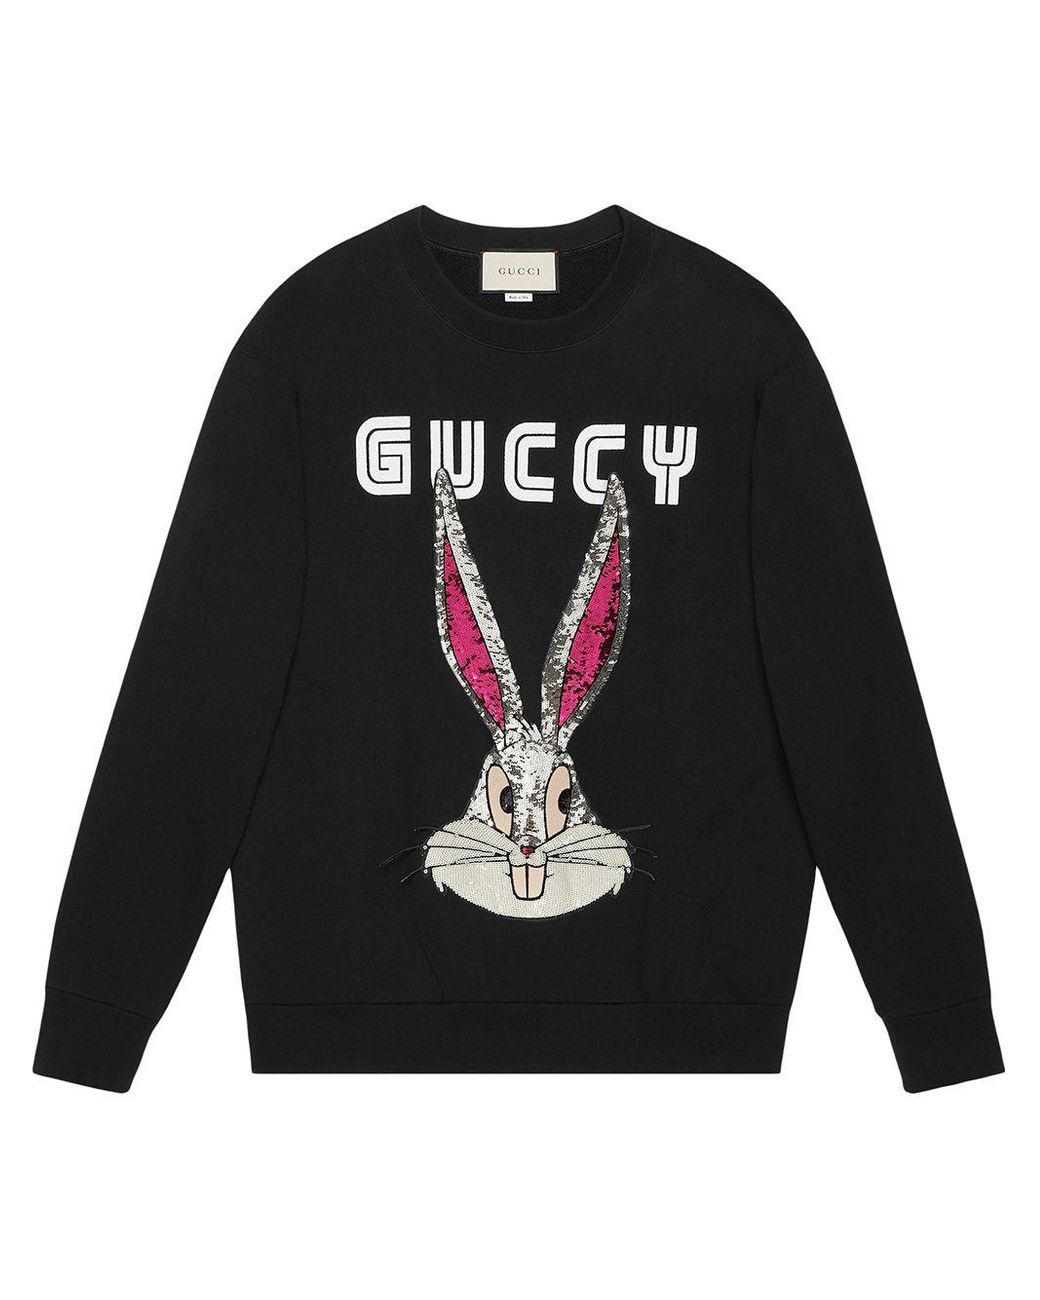 Gucci Bugs Bunny Cotton Sweatshirt in Black | Lyst